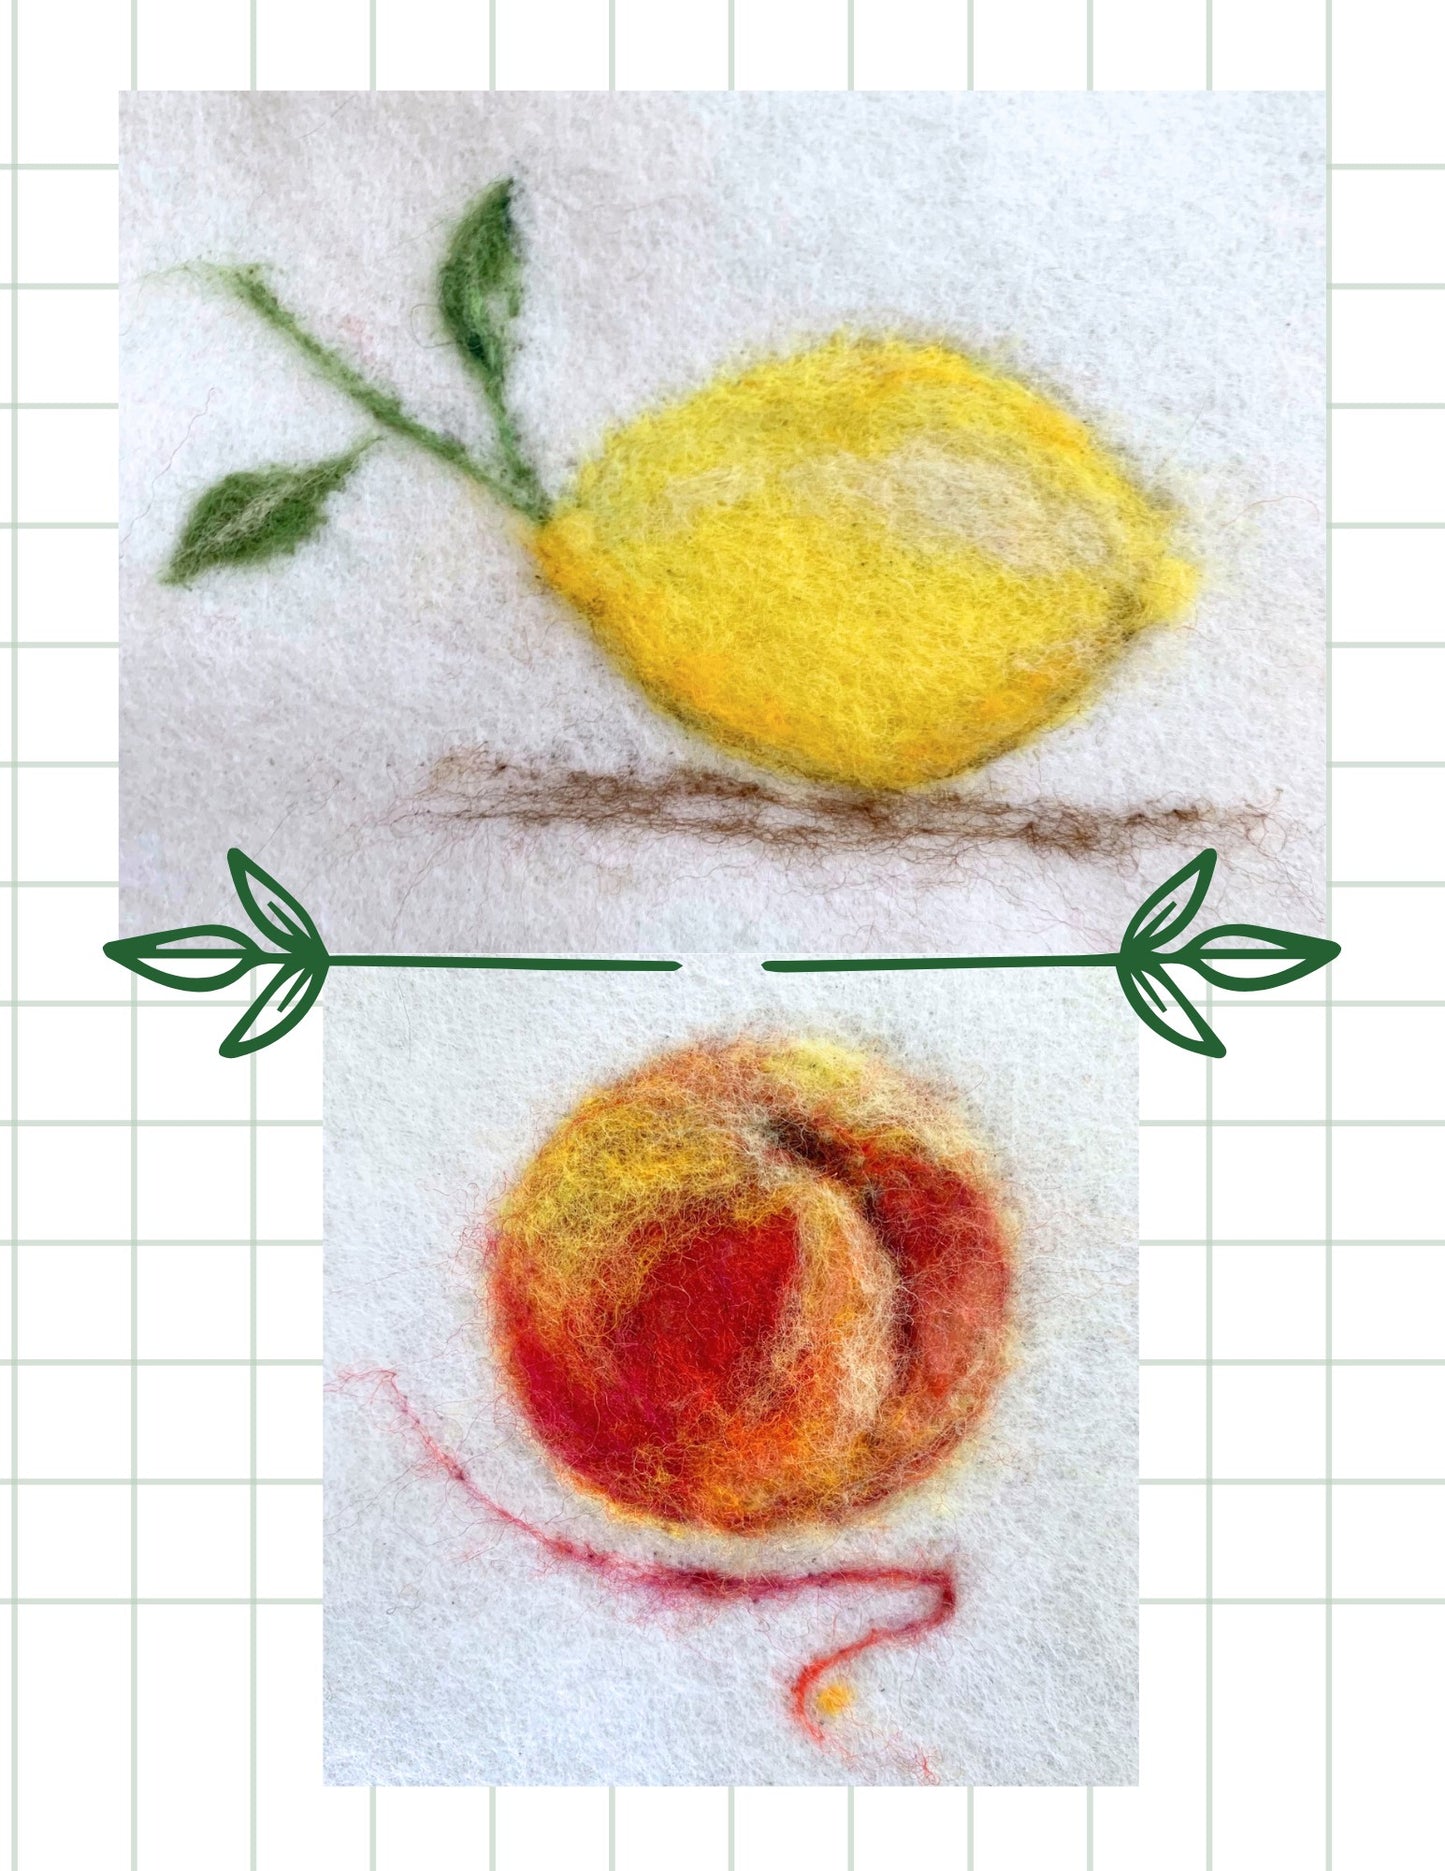 Take A Poke At Fruits - Apple & Pear Needle Felting Kit